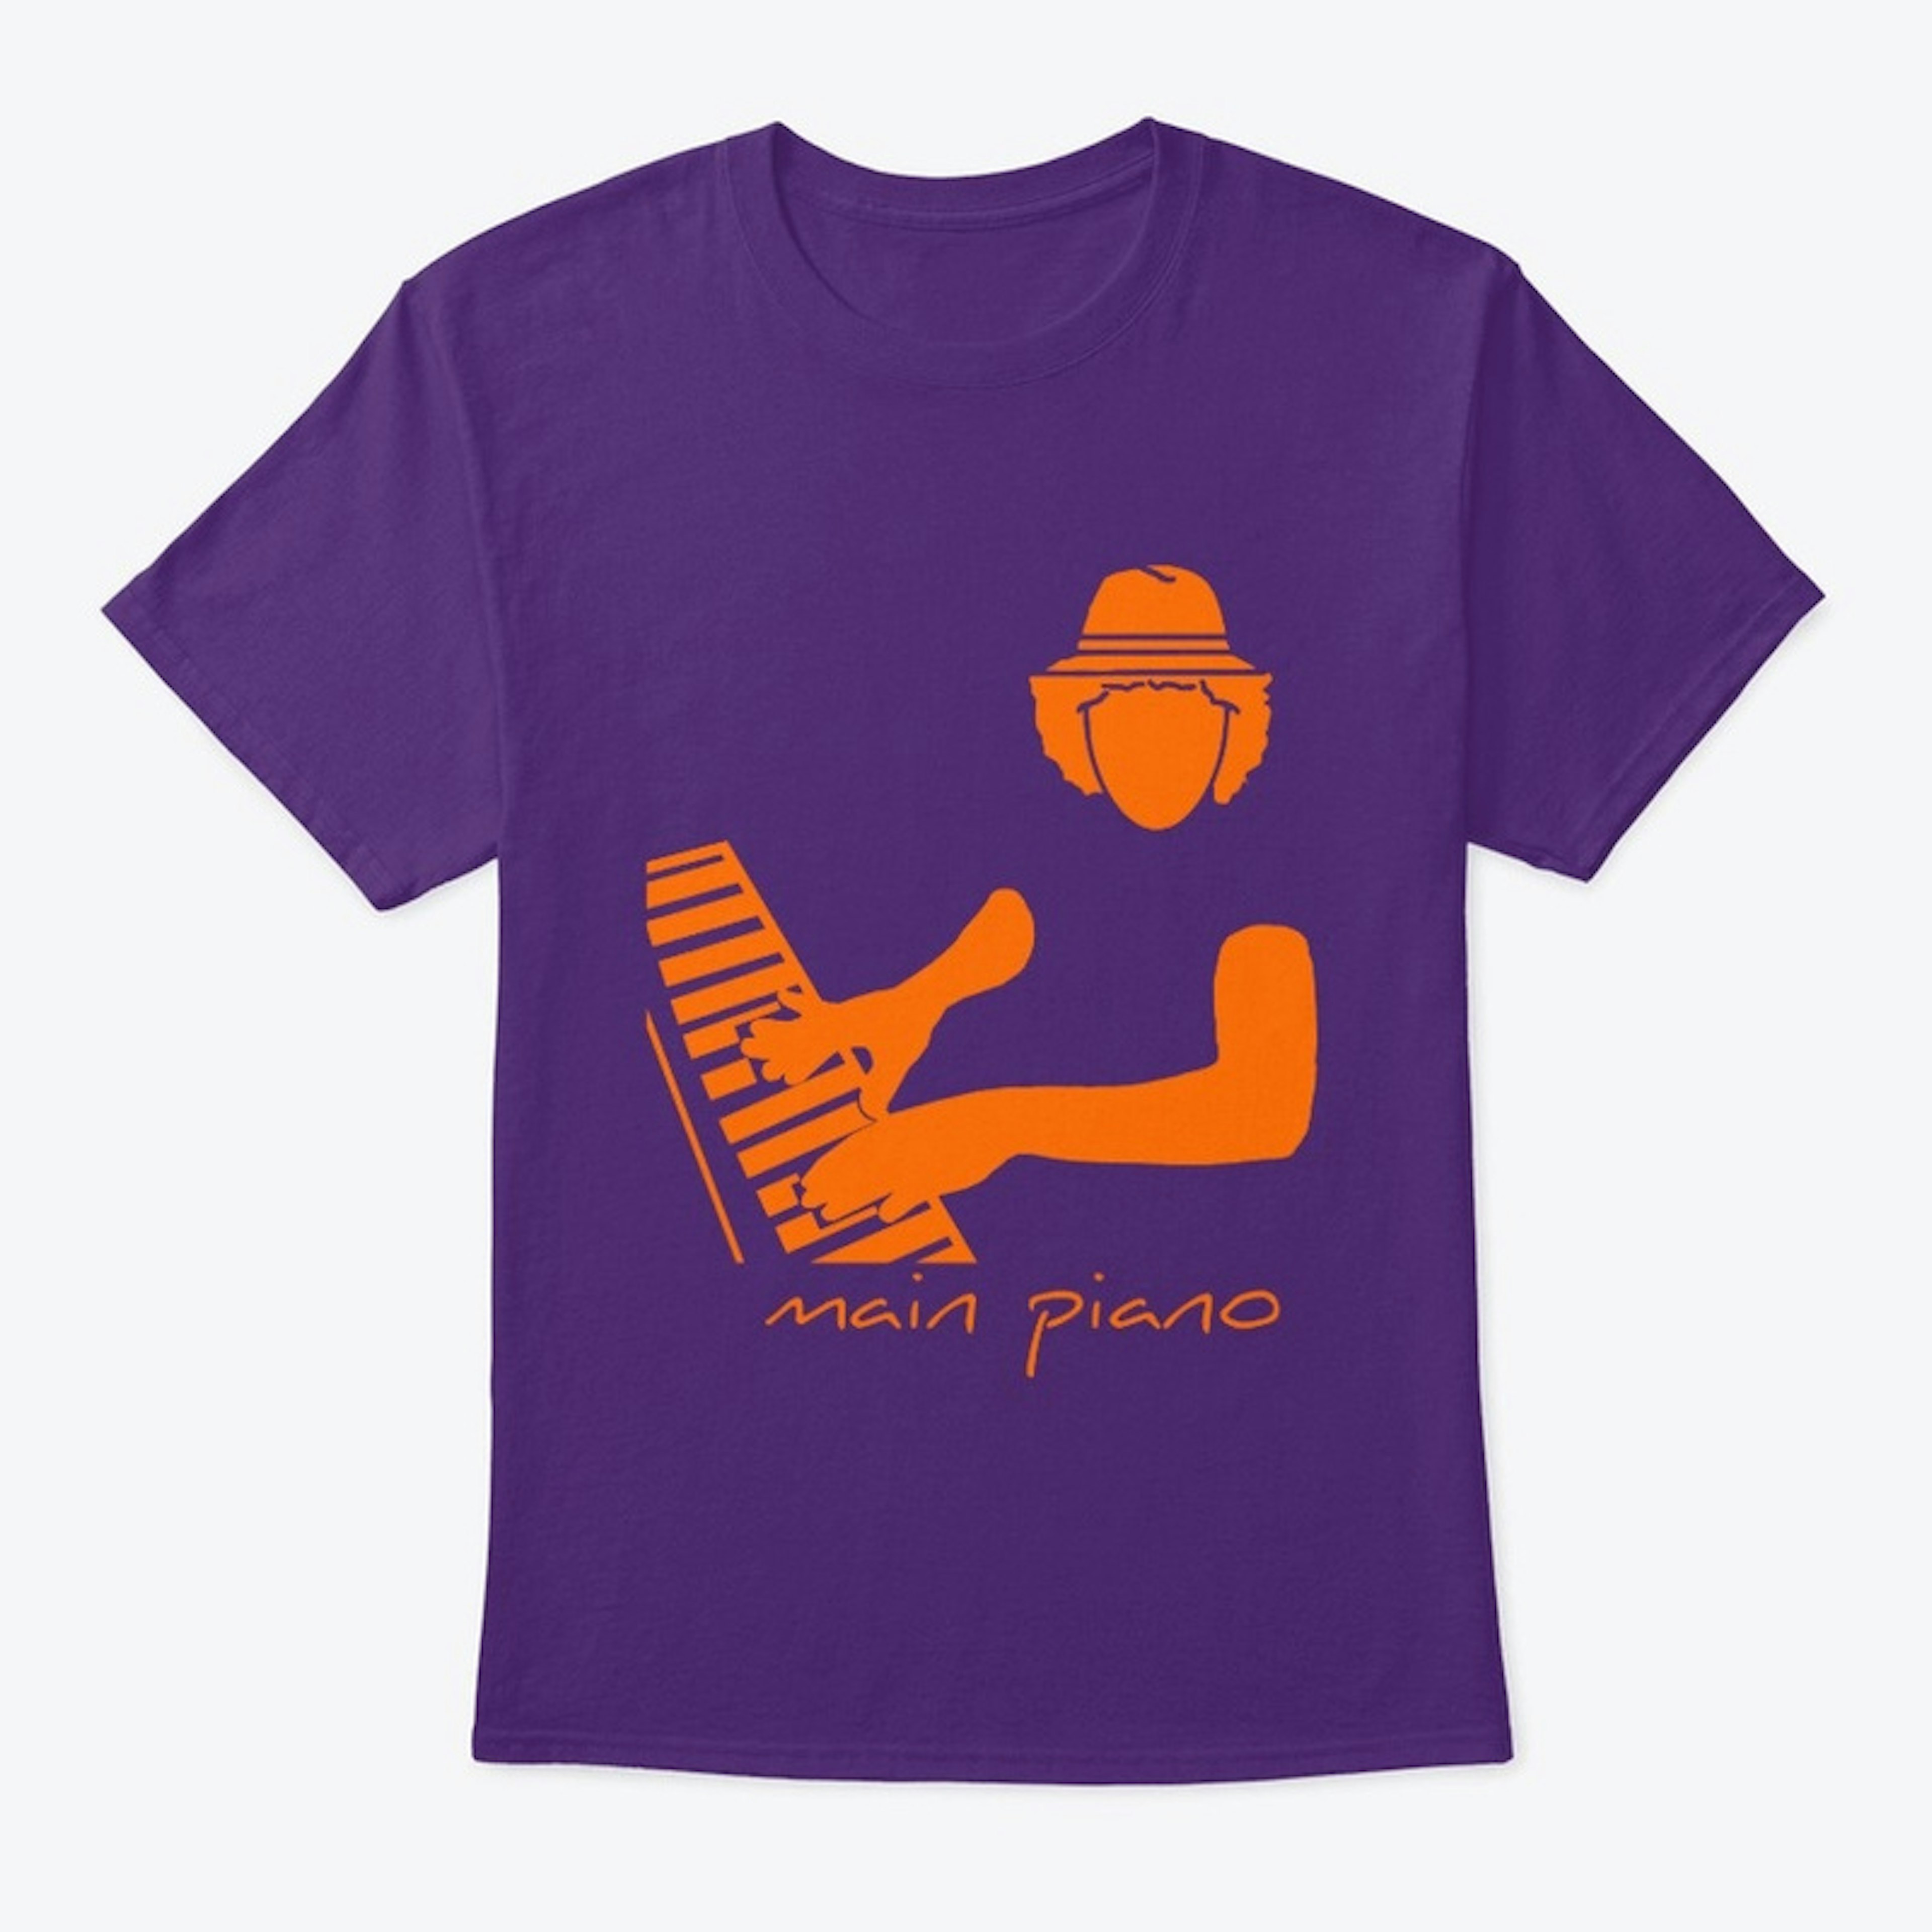 Main Piano T-Shirt (Orange Logo)